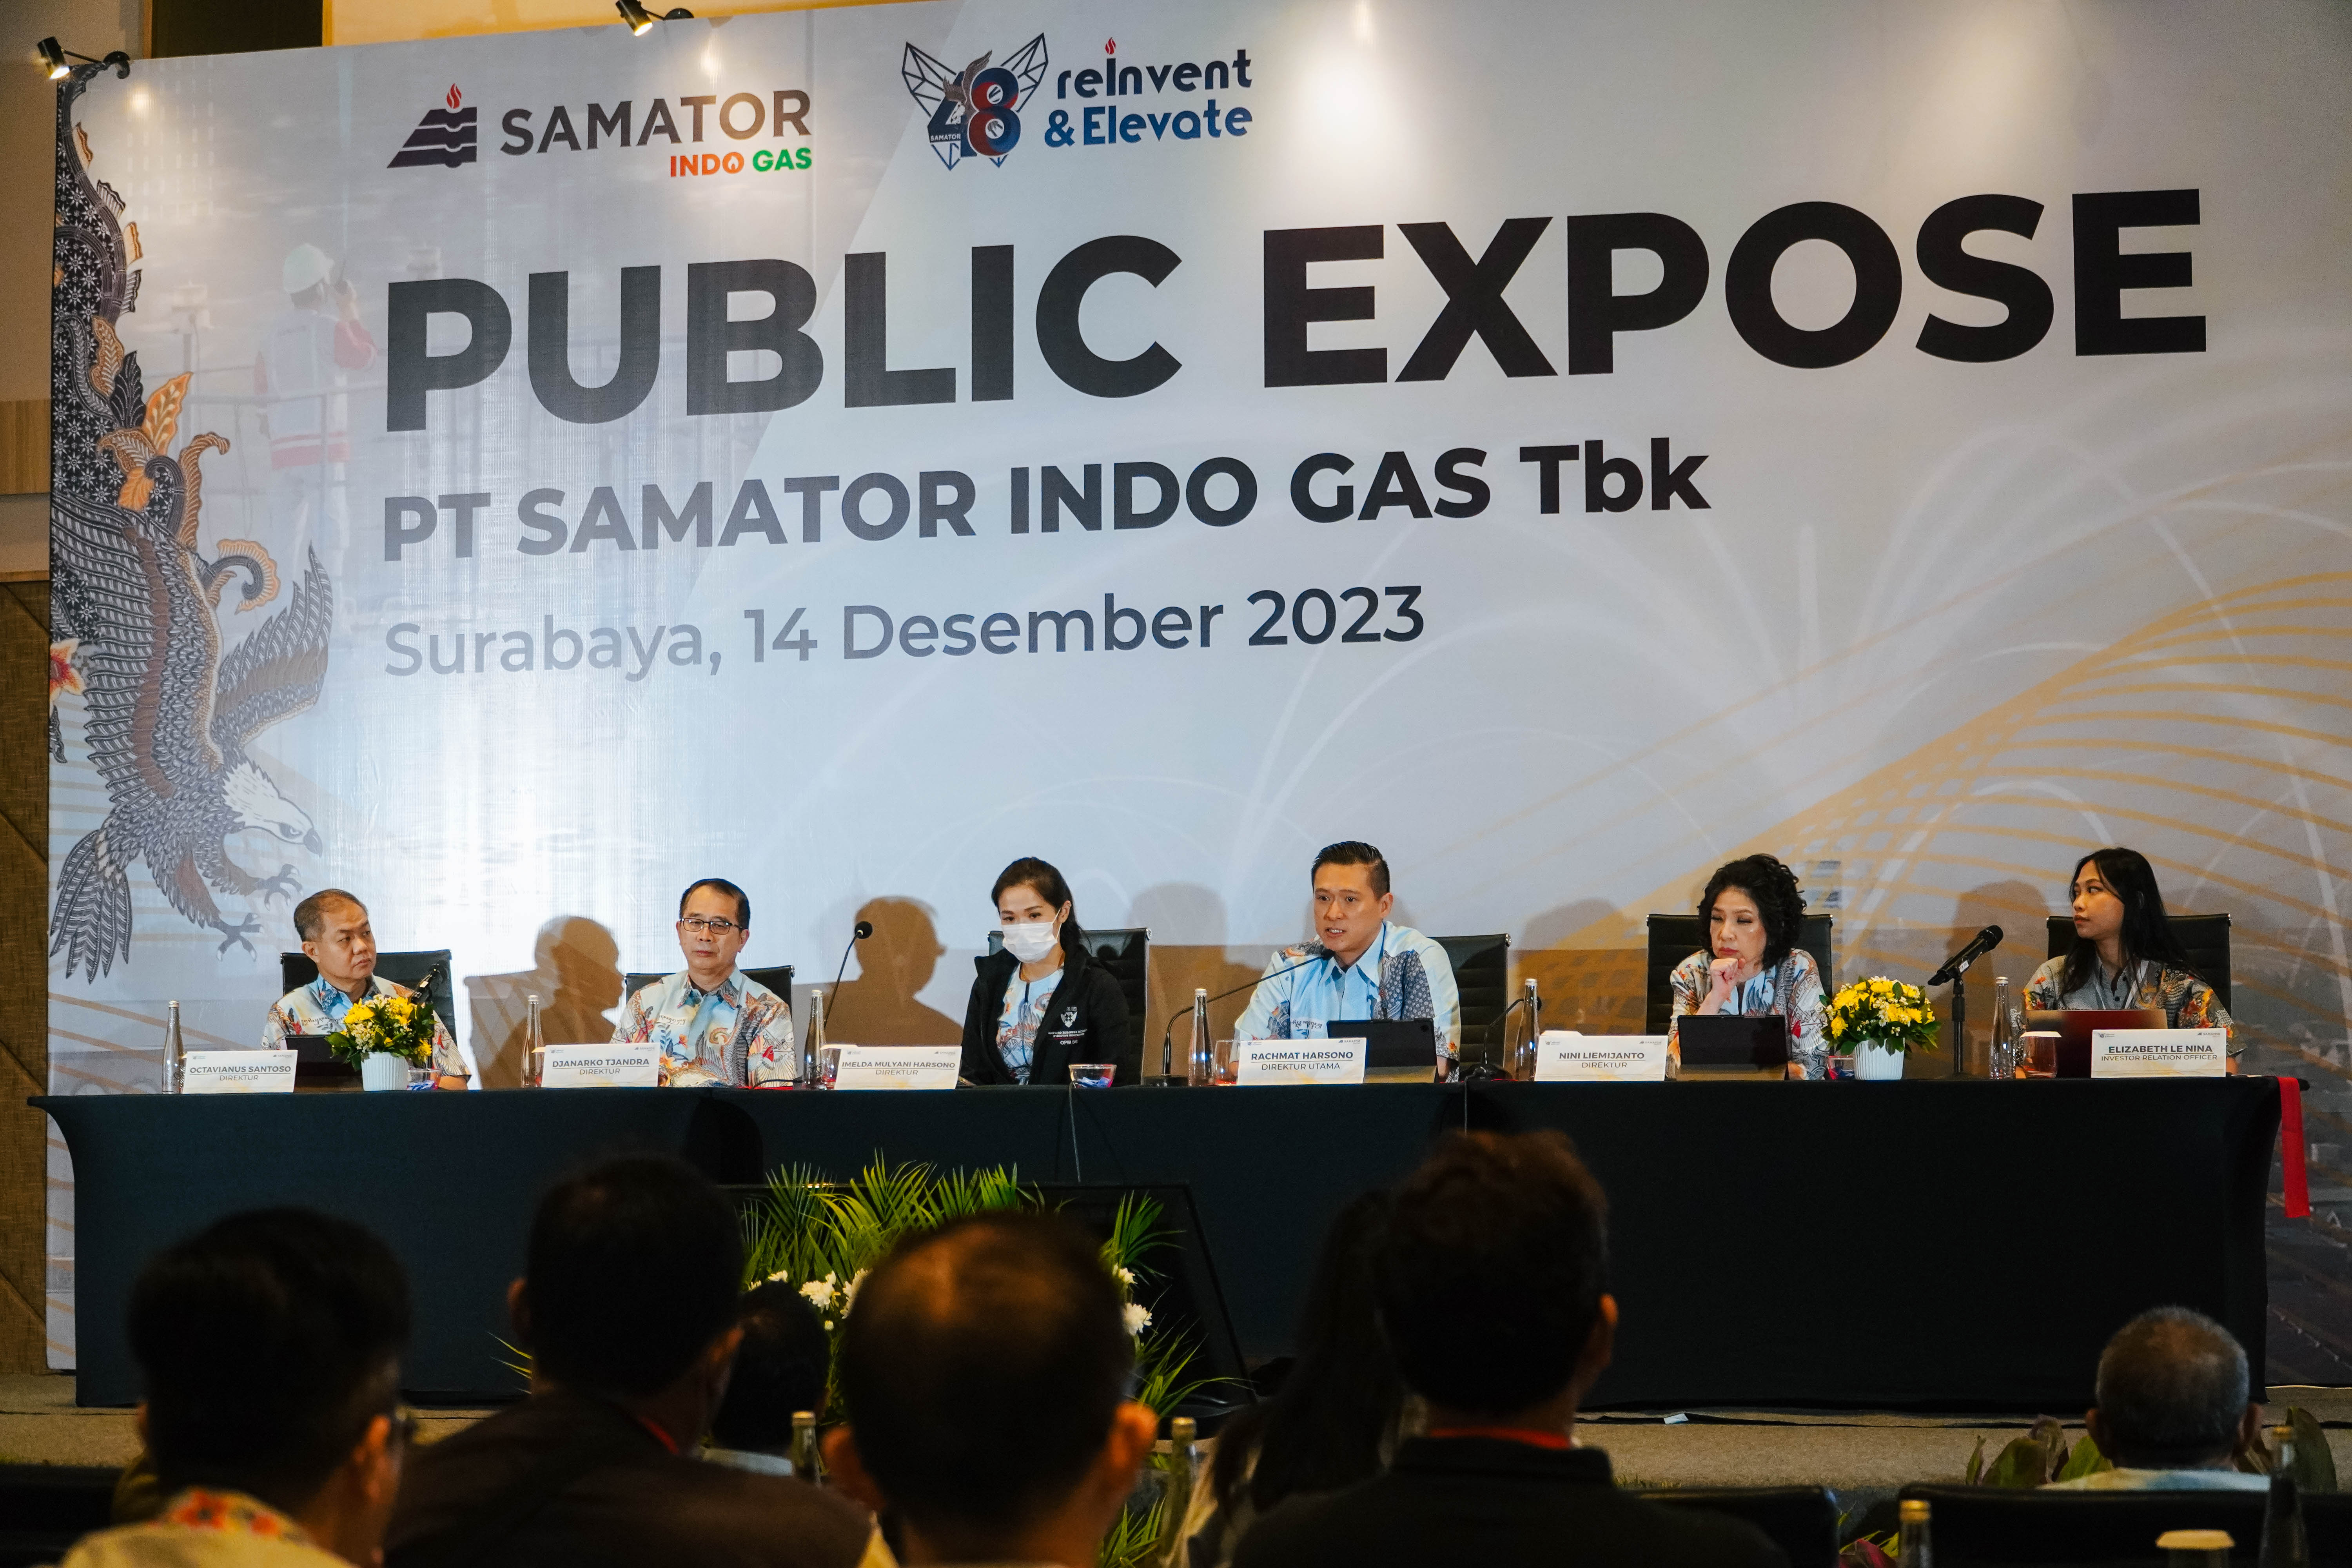 Antisipasi Lonjakan Permintaan, Samator Indo Gas (AGII) Bangun Pabrik Nitrogen Baru